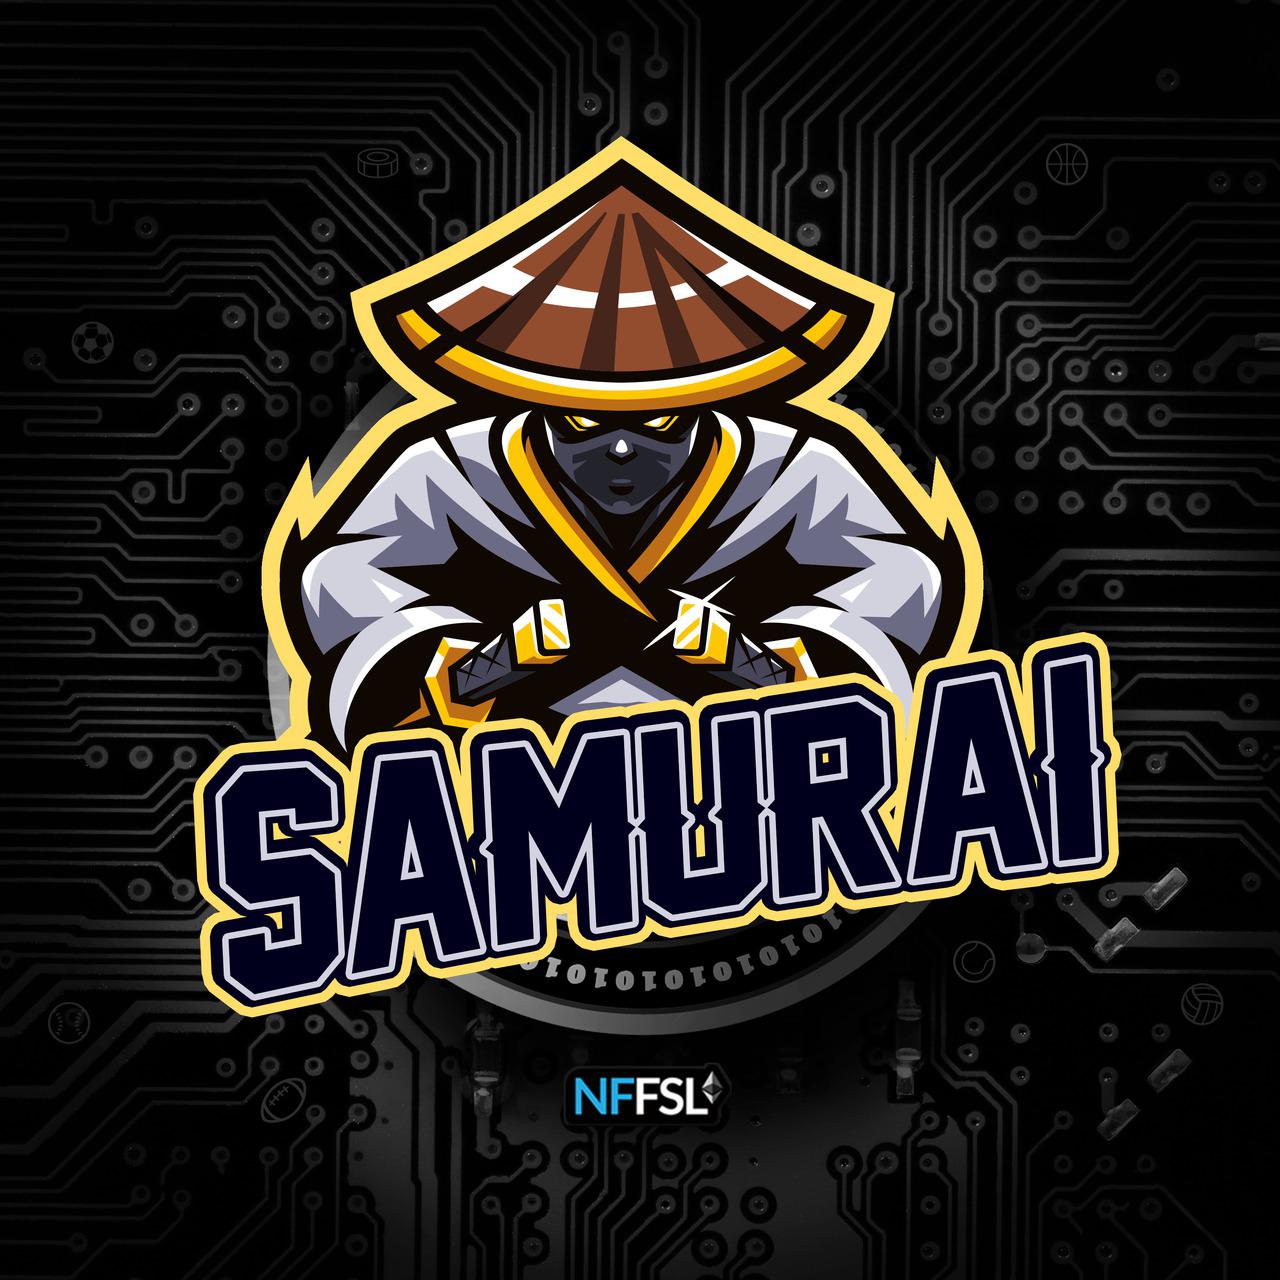 Samurai_NFFSL